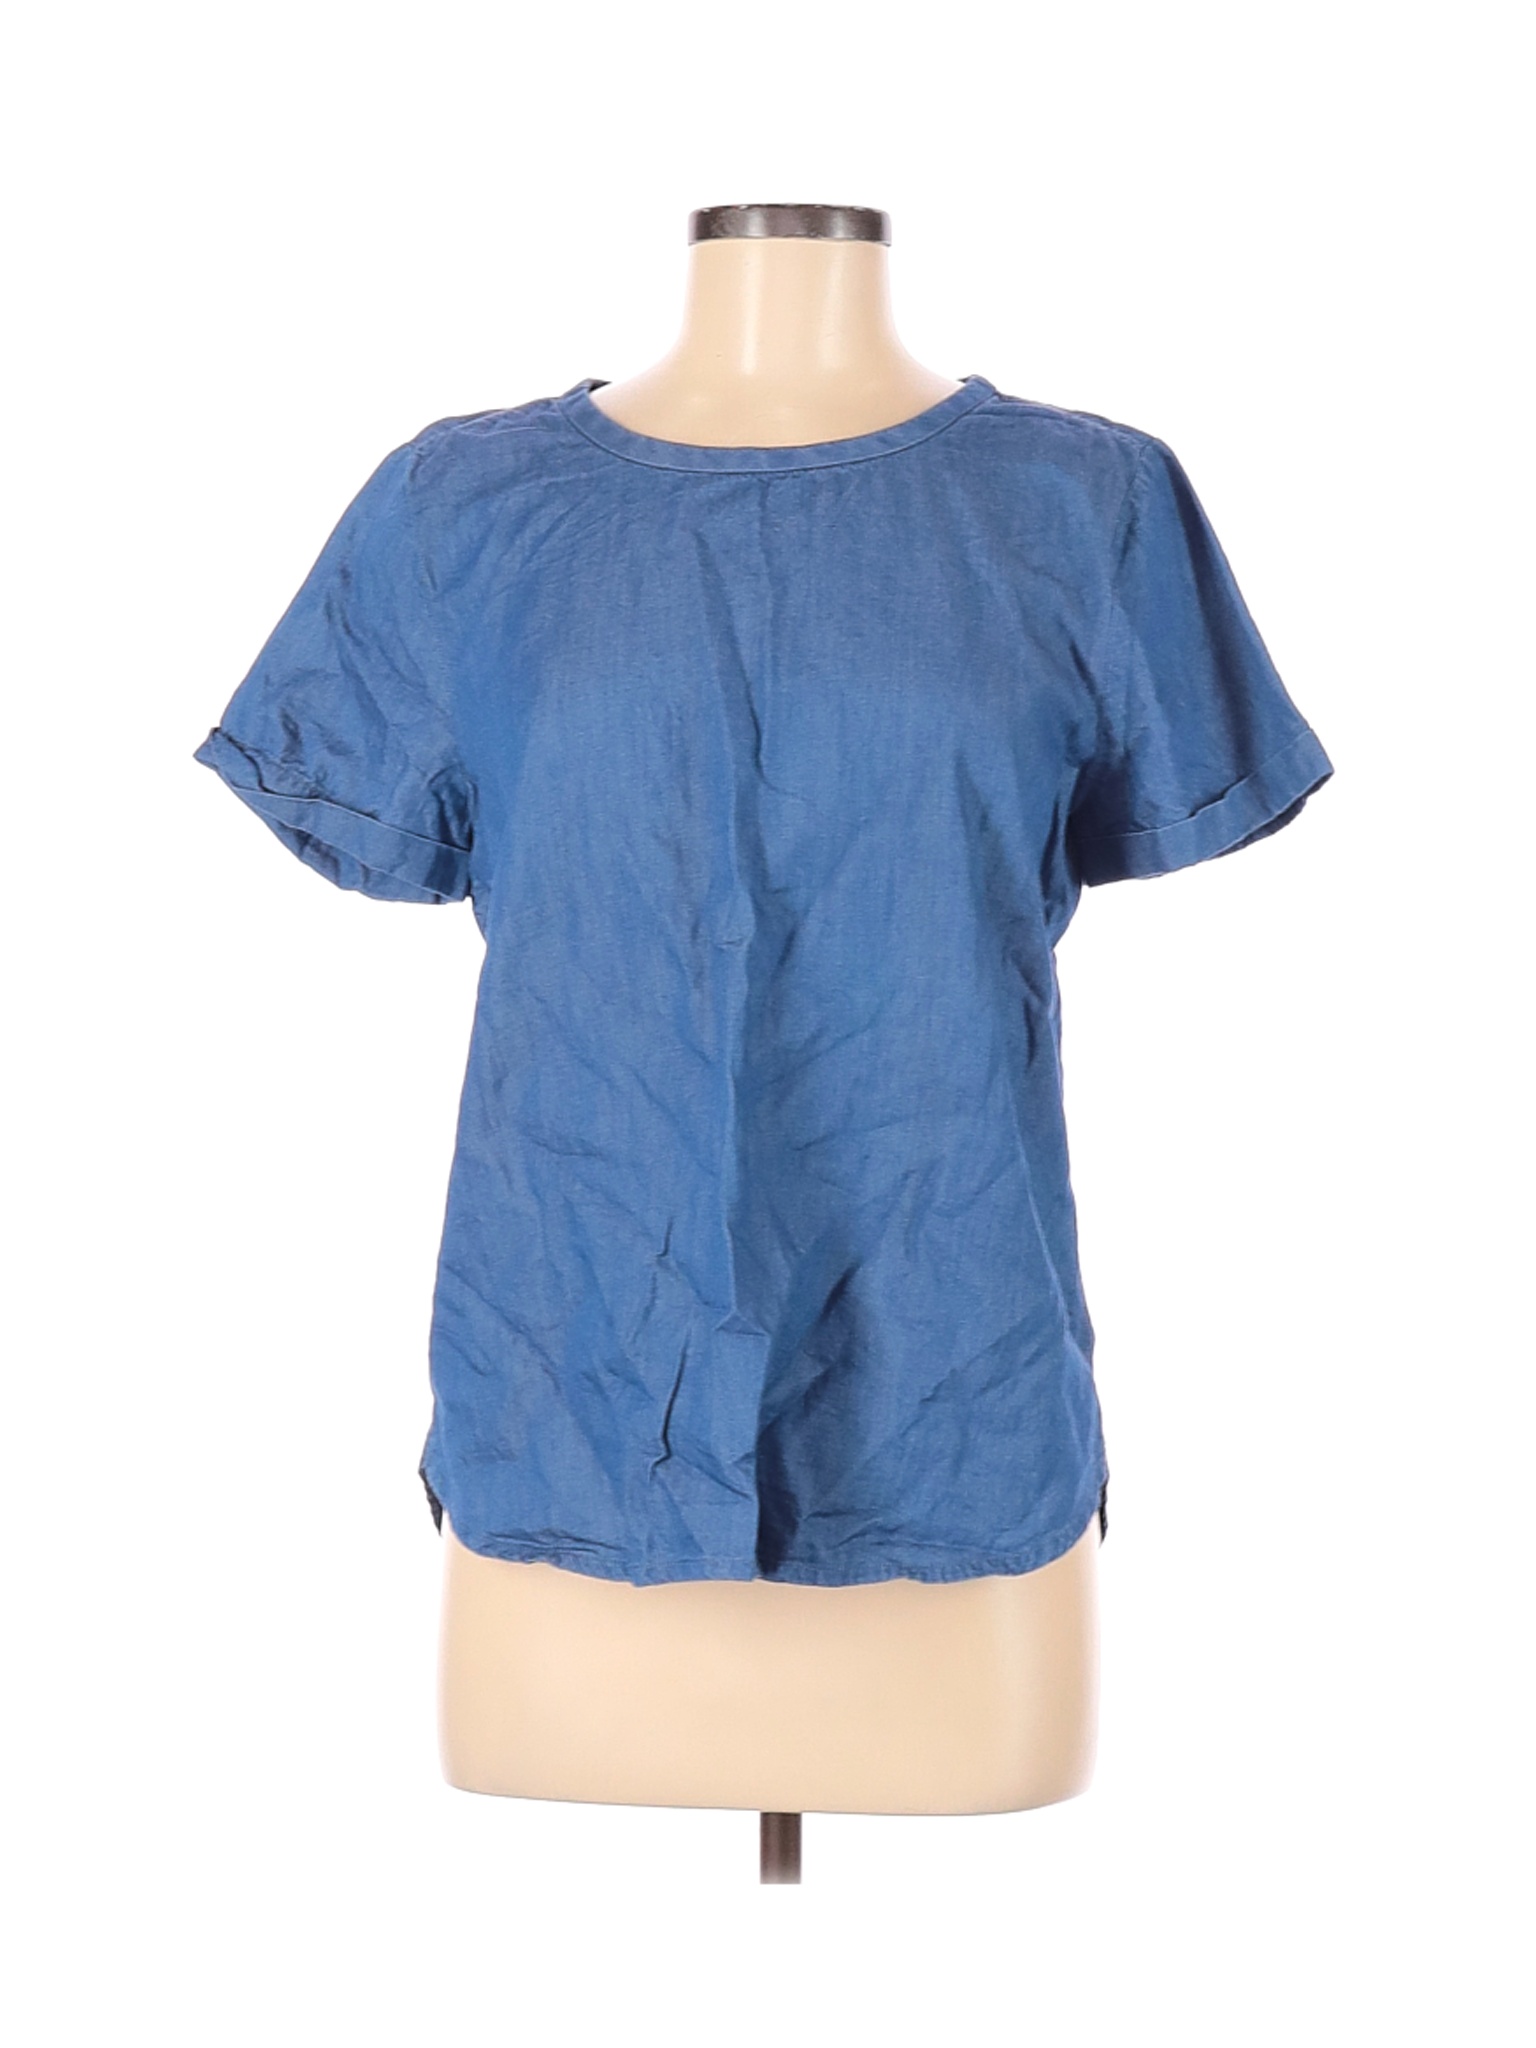 J.Crew Women Blue Short Sleeve Blouse M | eBay